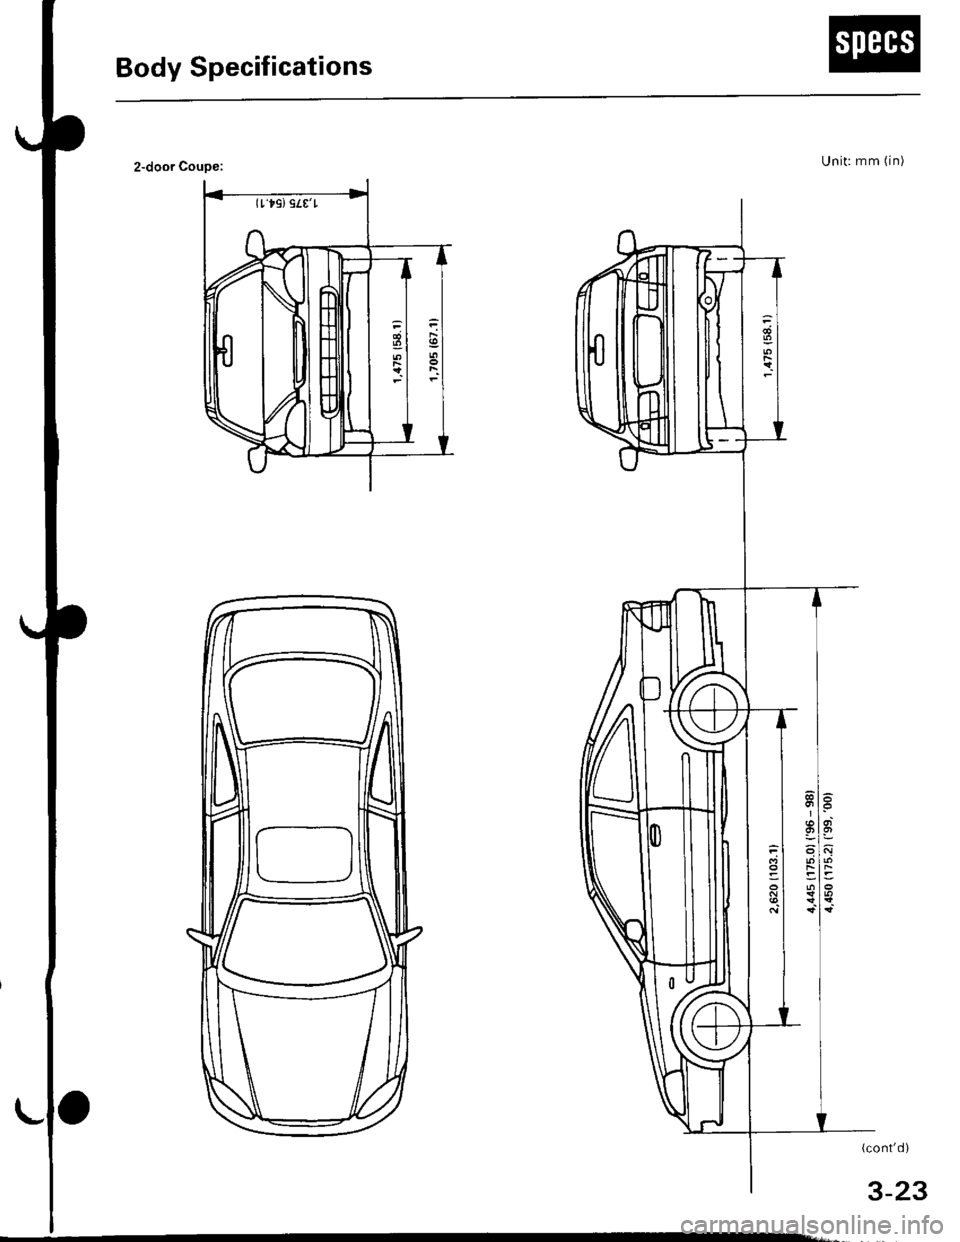 HONDA CIVIC 1997 6.G Repair Manual Body Specifications
Unit: mm (in)2-door Coupe:
lt t9) gttt 